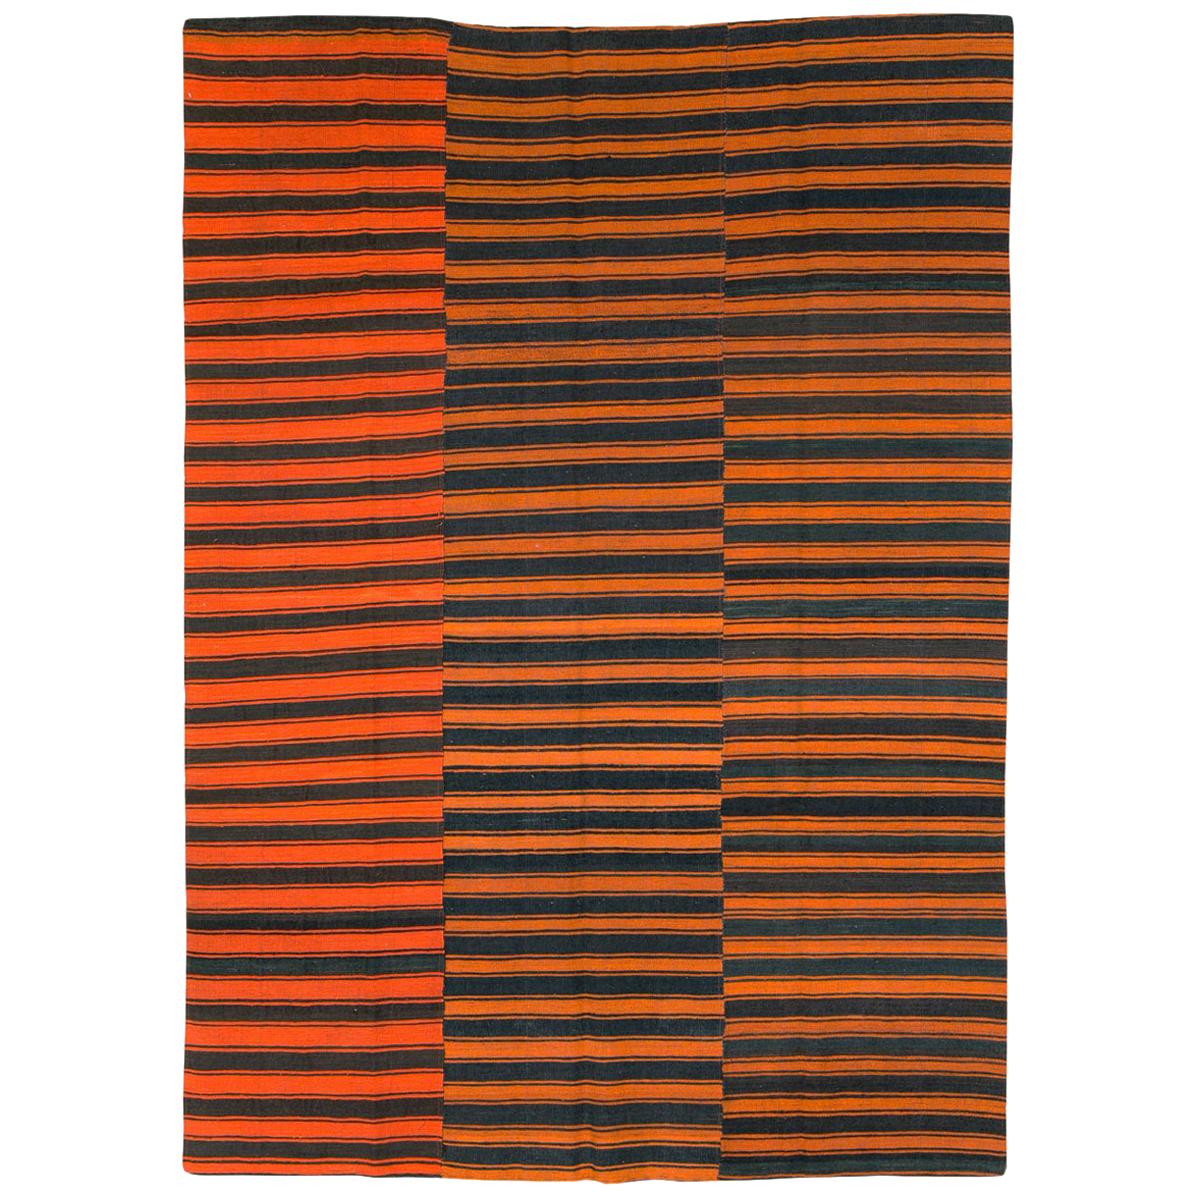 Mid-20th Century Orange and Black Turkish Flat-Weave Kilim Room Size Accent Rug